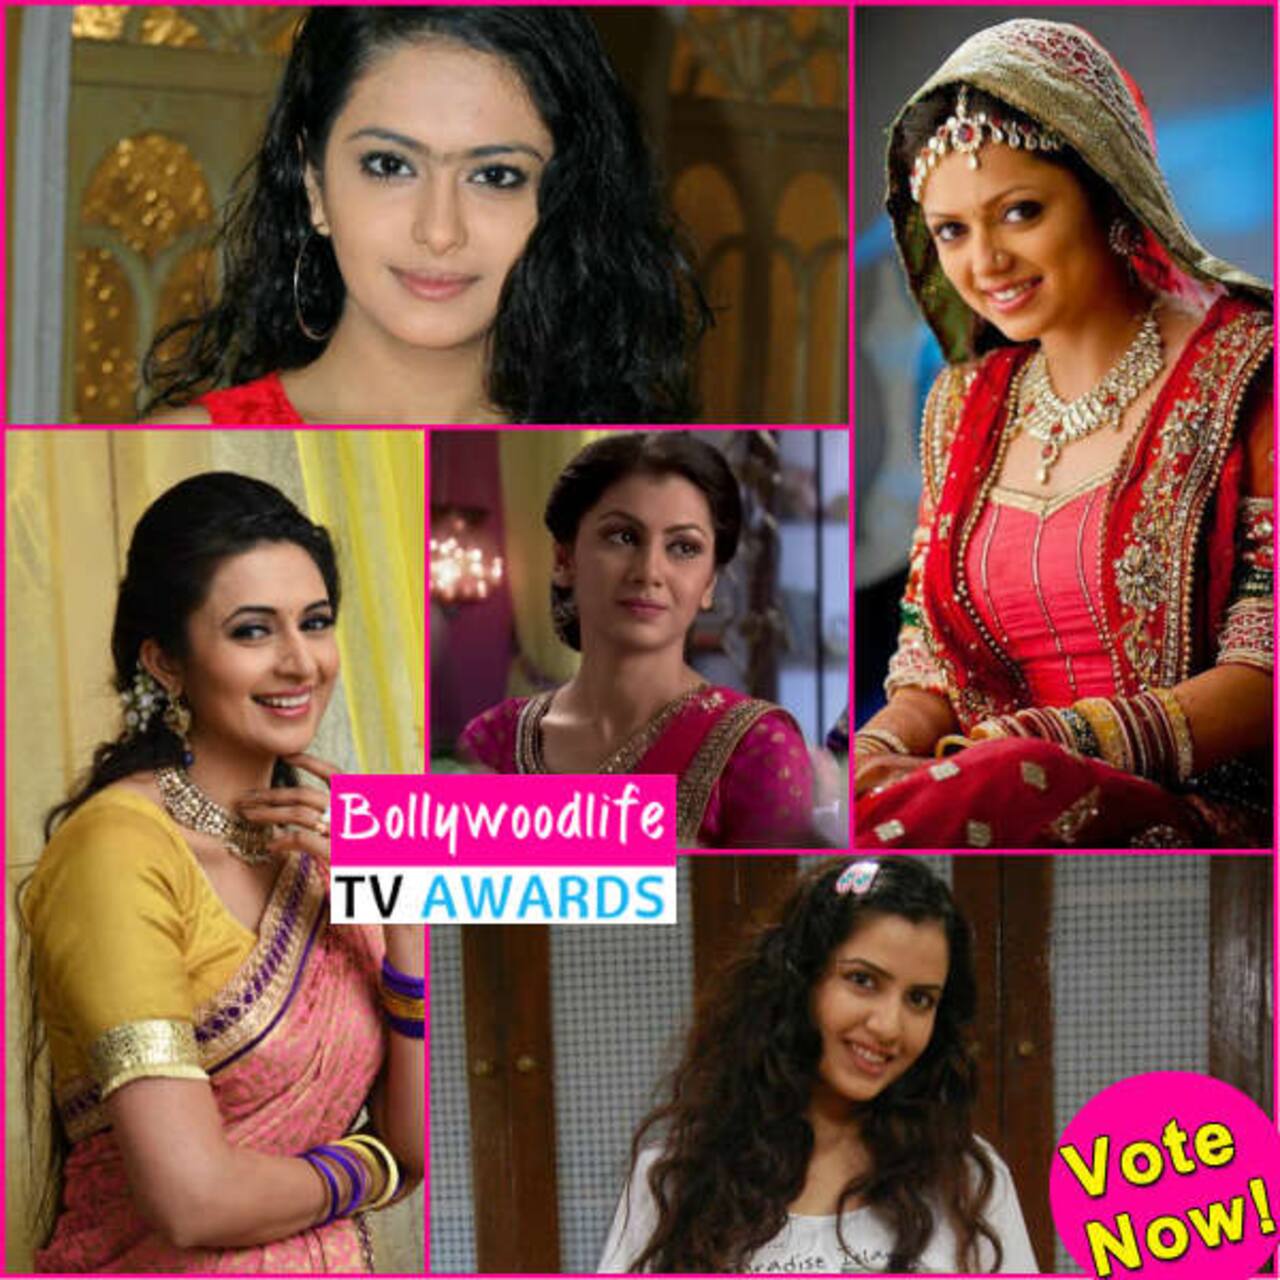 BollywoodLife TV Awards 2015: Yeh Hai Mohabbatein’s Ishita, Kumkum Bhagya’s Pragya, or Itti Si Khushi’s Neha – who is the most popular onscreen actress? Vote!